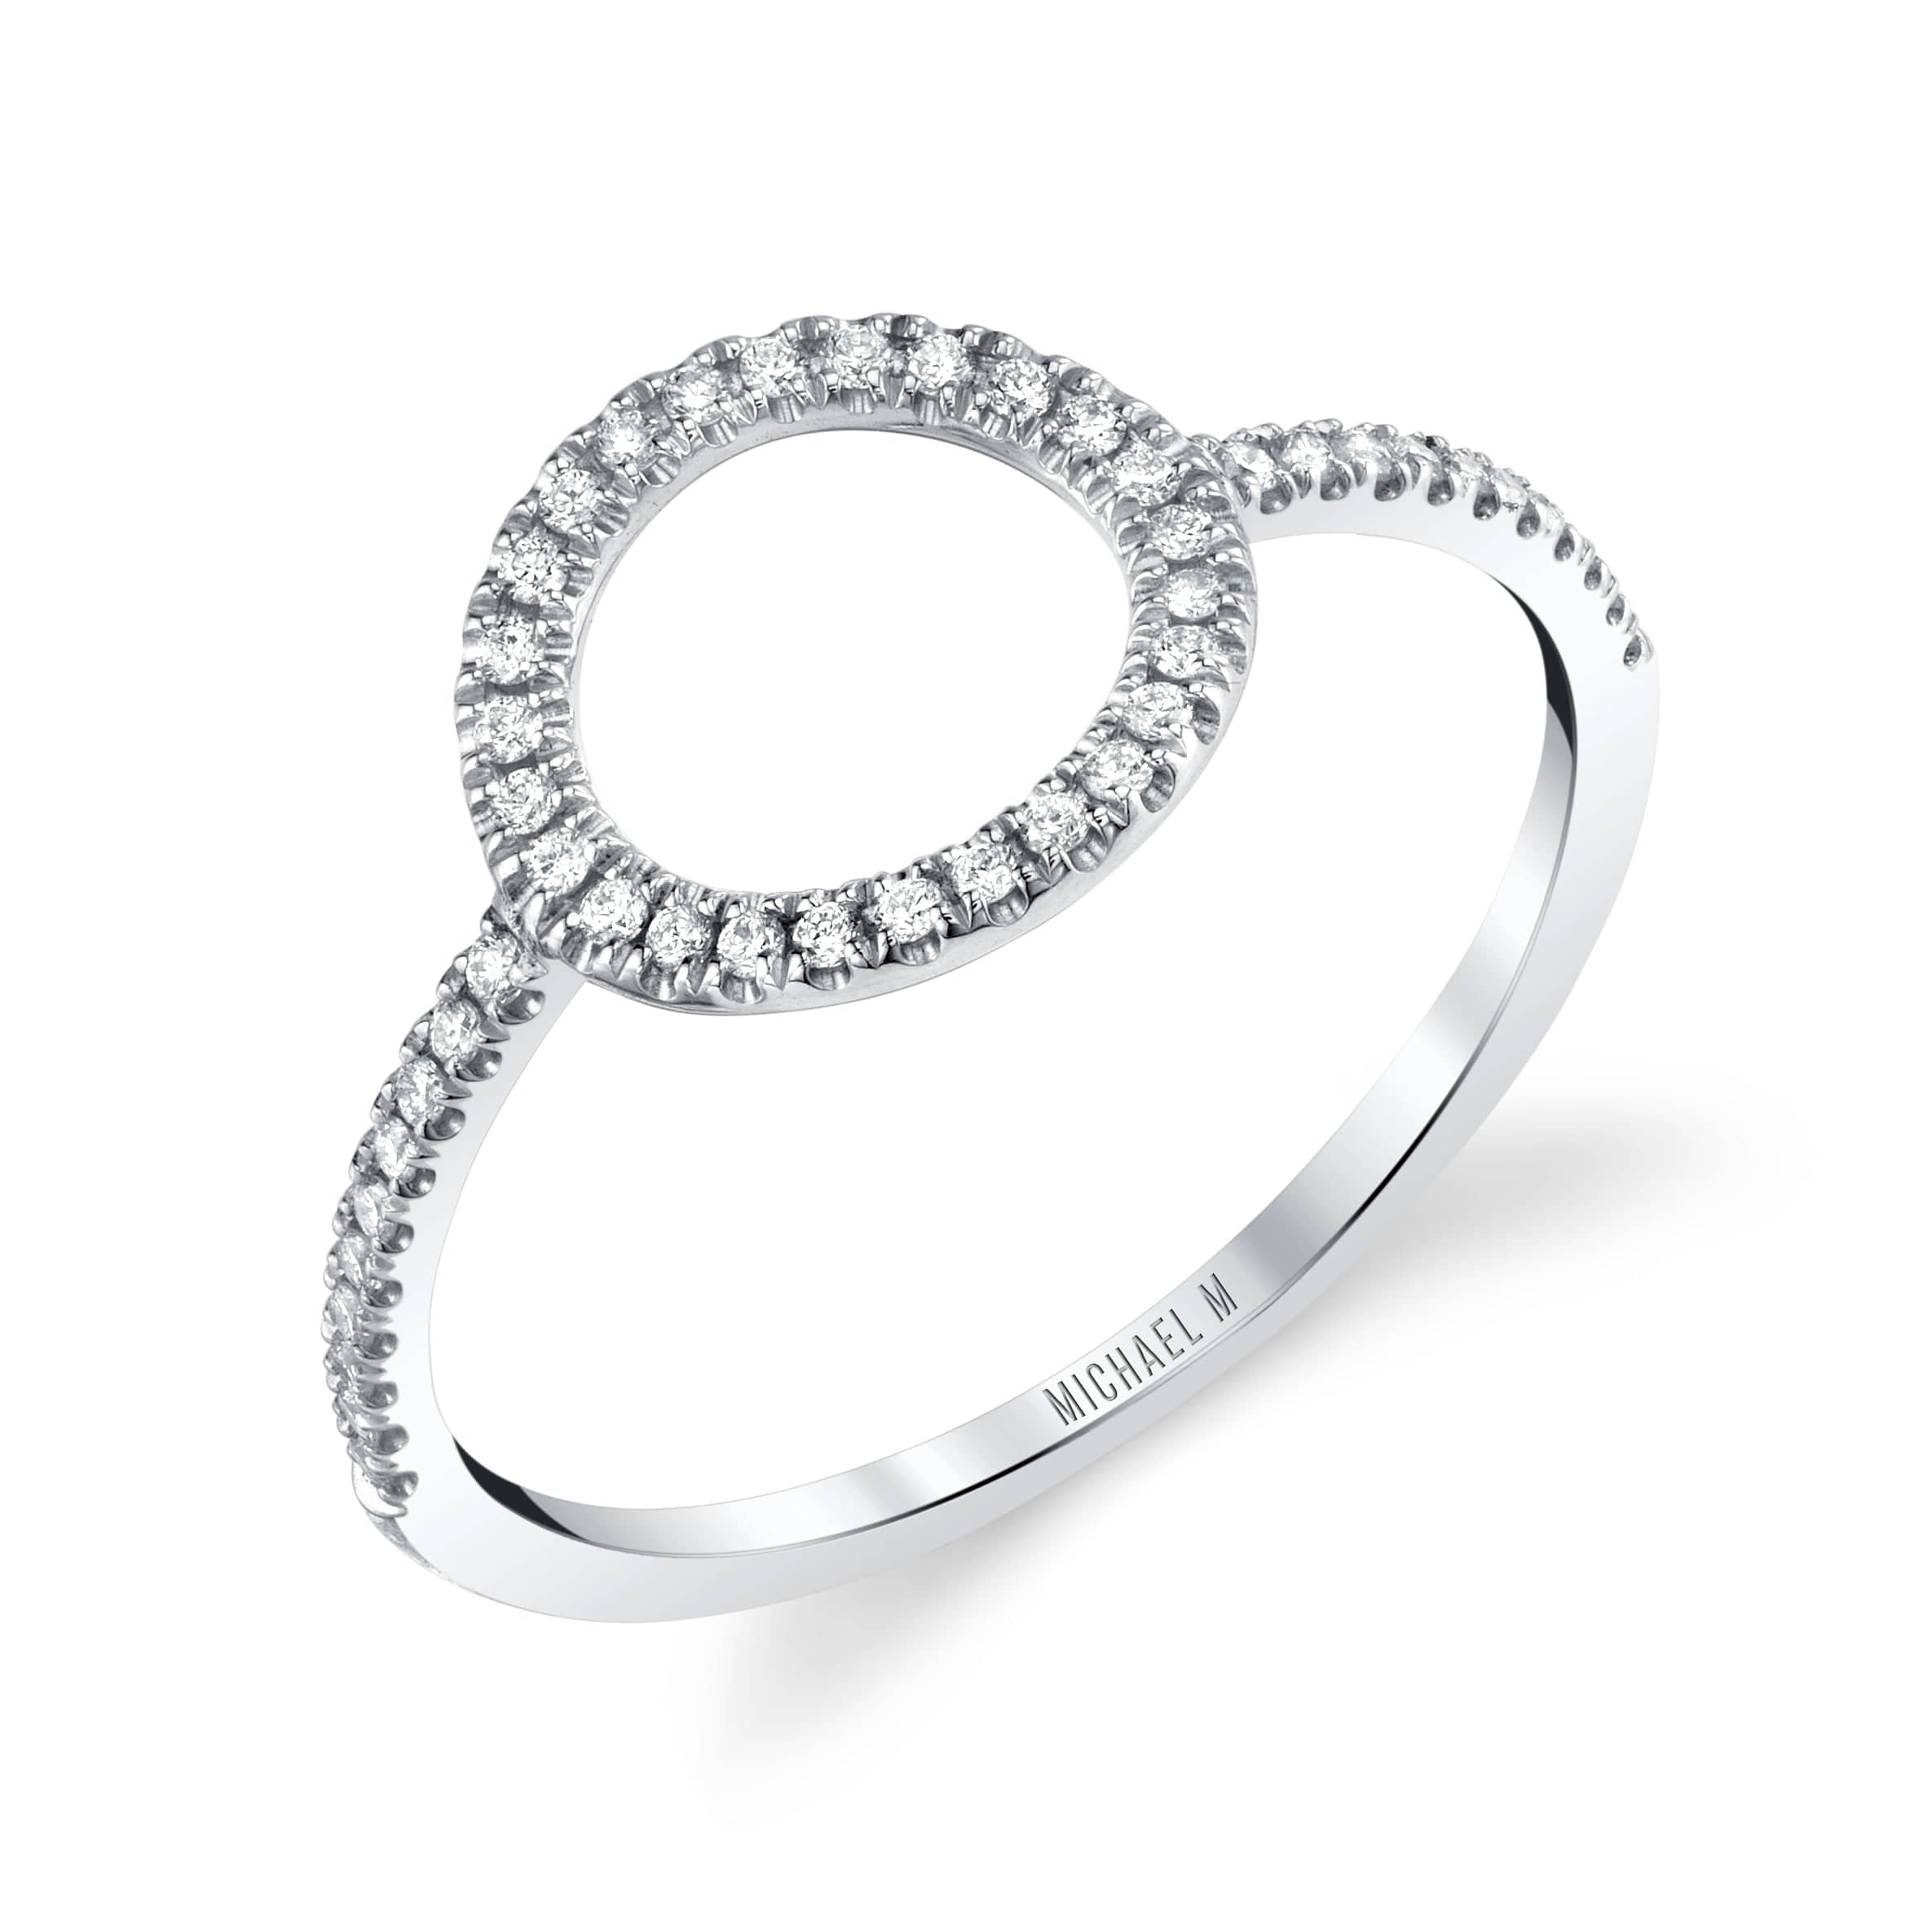 MICHAEL M Fashion Rings 14K White Gold / 4 Diamond Open Circle Ring F279-WG4